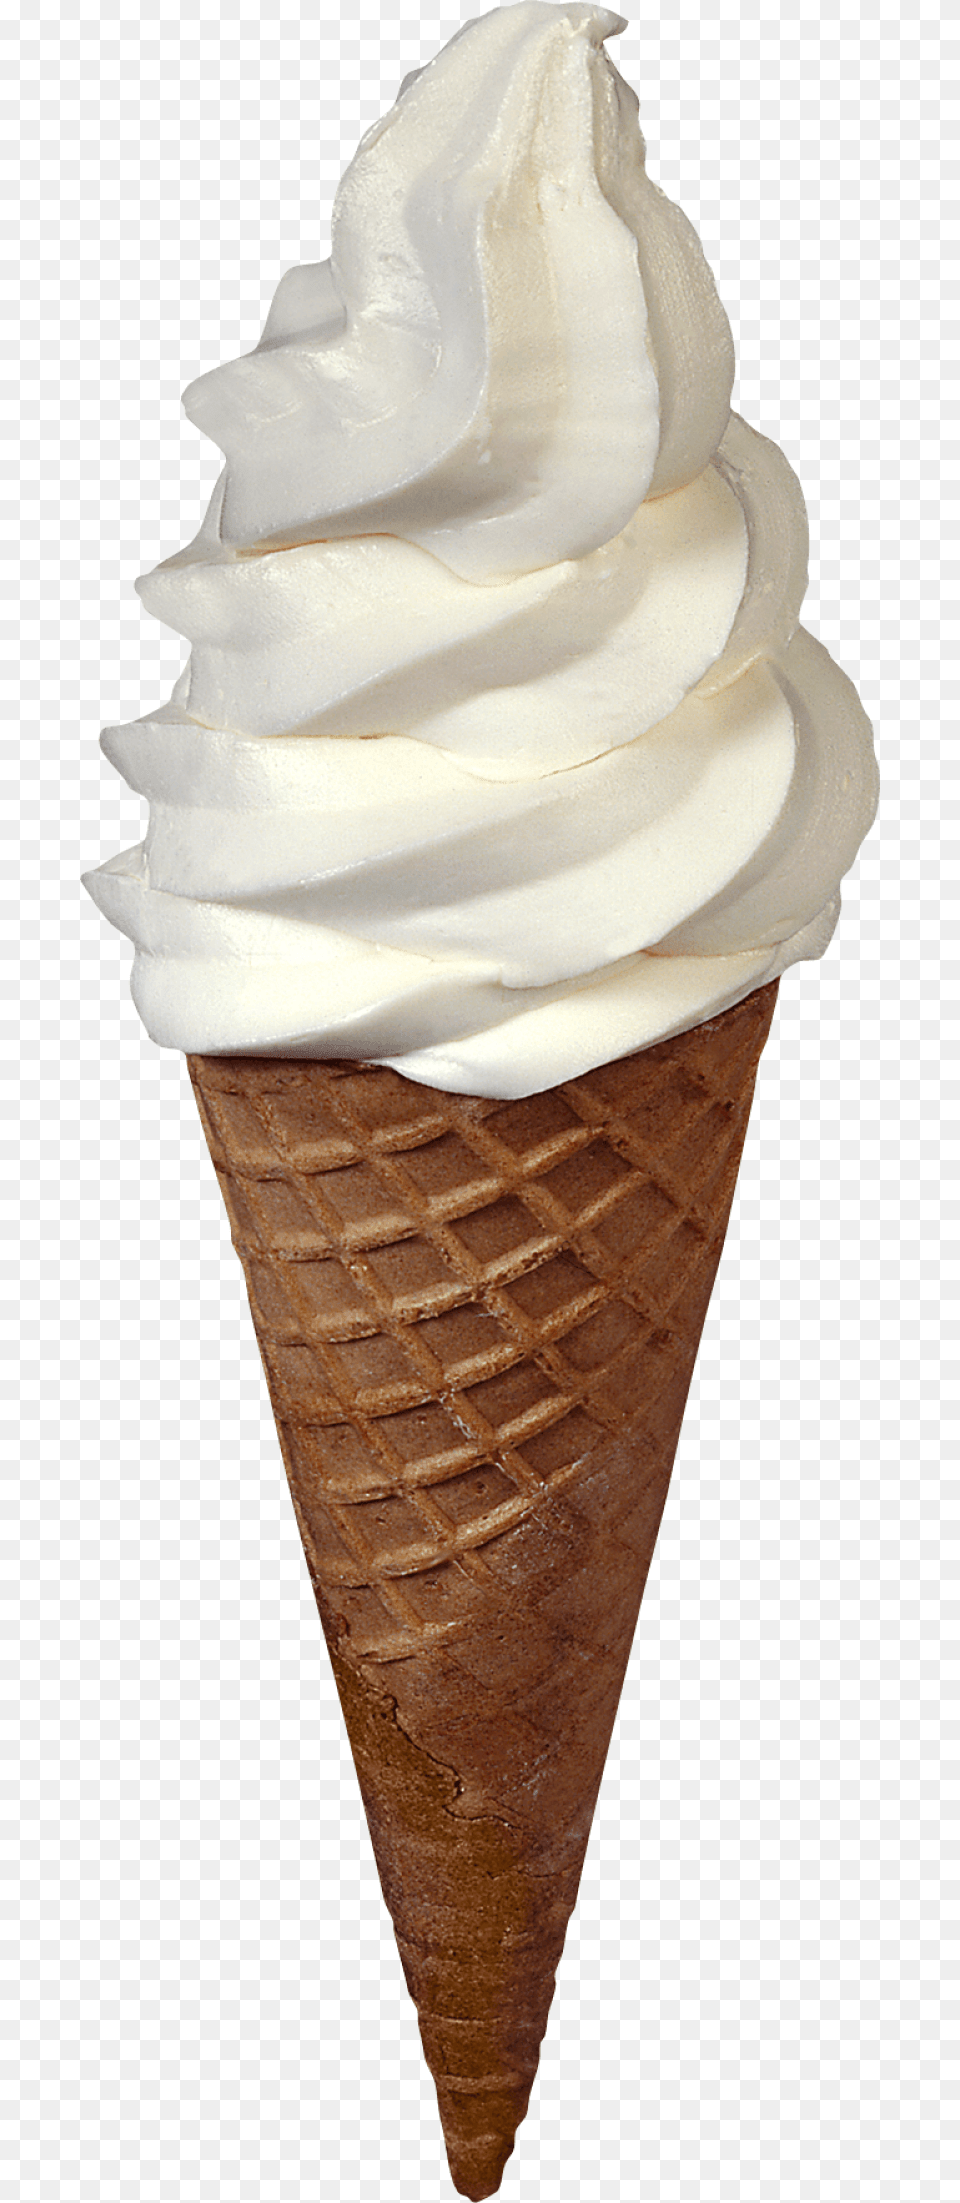 Vanilla Soft Ice Ice Cream Soft Serve, Dessert, Food, Ice Cream, Soft Serve Ice Cream Png Image